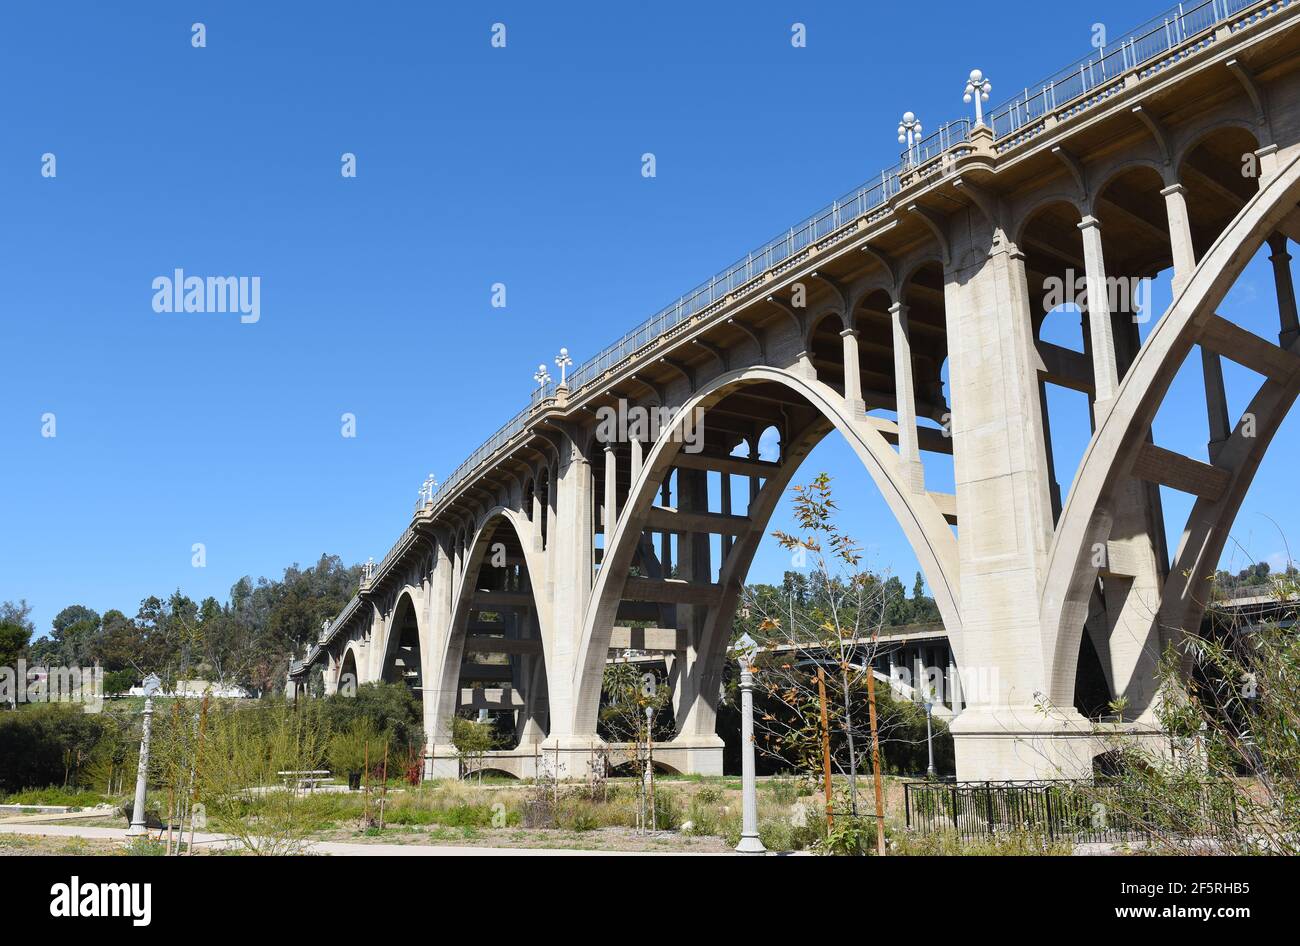 PASADENA, CALIFORNIA - 26 MAR 2021: The Colorado Street Bridge, seen from Desiderio Neighborhood Park Stock Photo